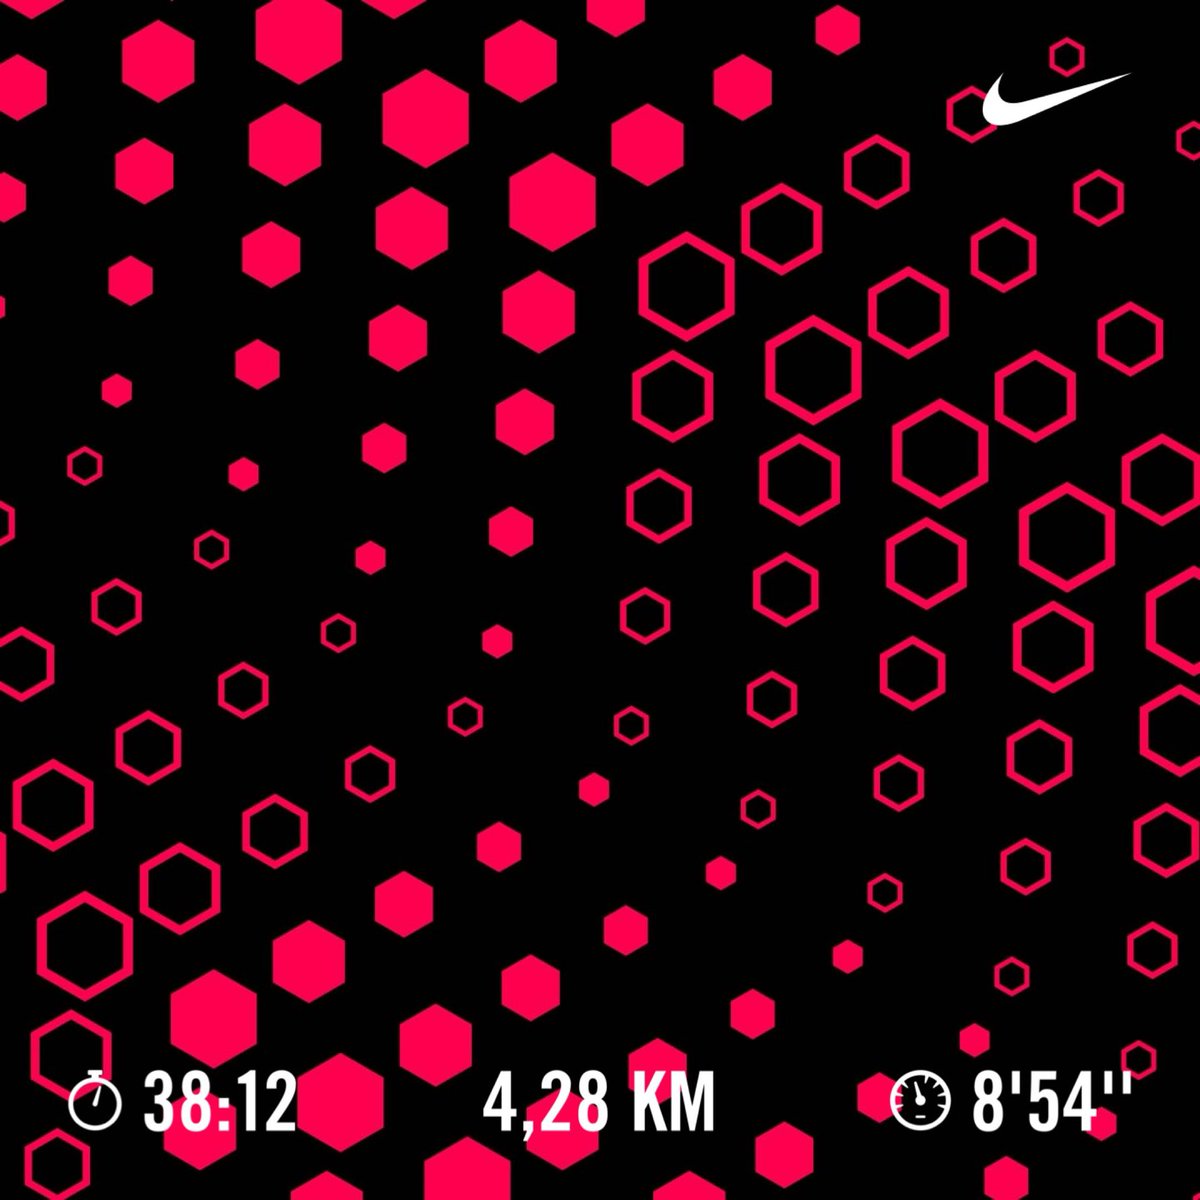 Just completed a 4,28 km run! #Adidas #IWatch #NikeRunClub #Nieuwkuijk 🇳🇱